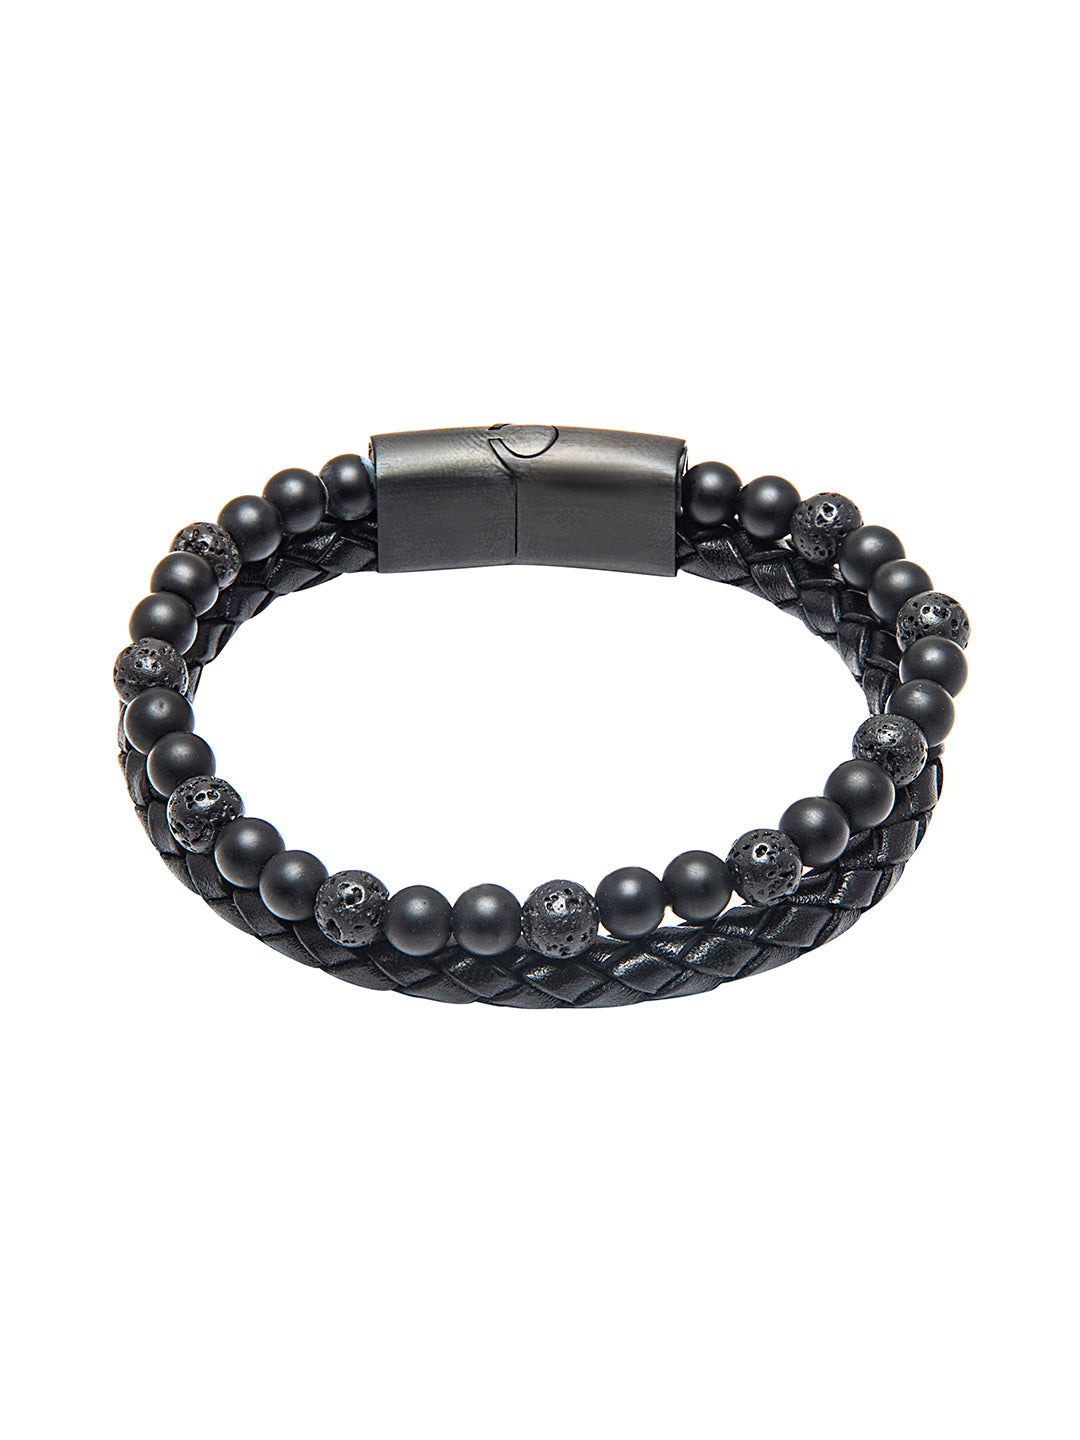 Lava and Hematite Aromatherapy Men's Bracelet|Positively Me Boutique